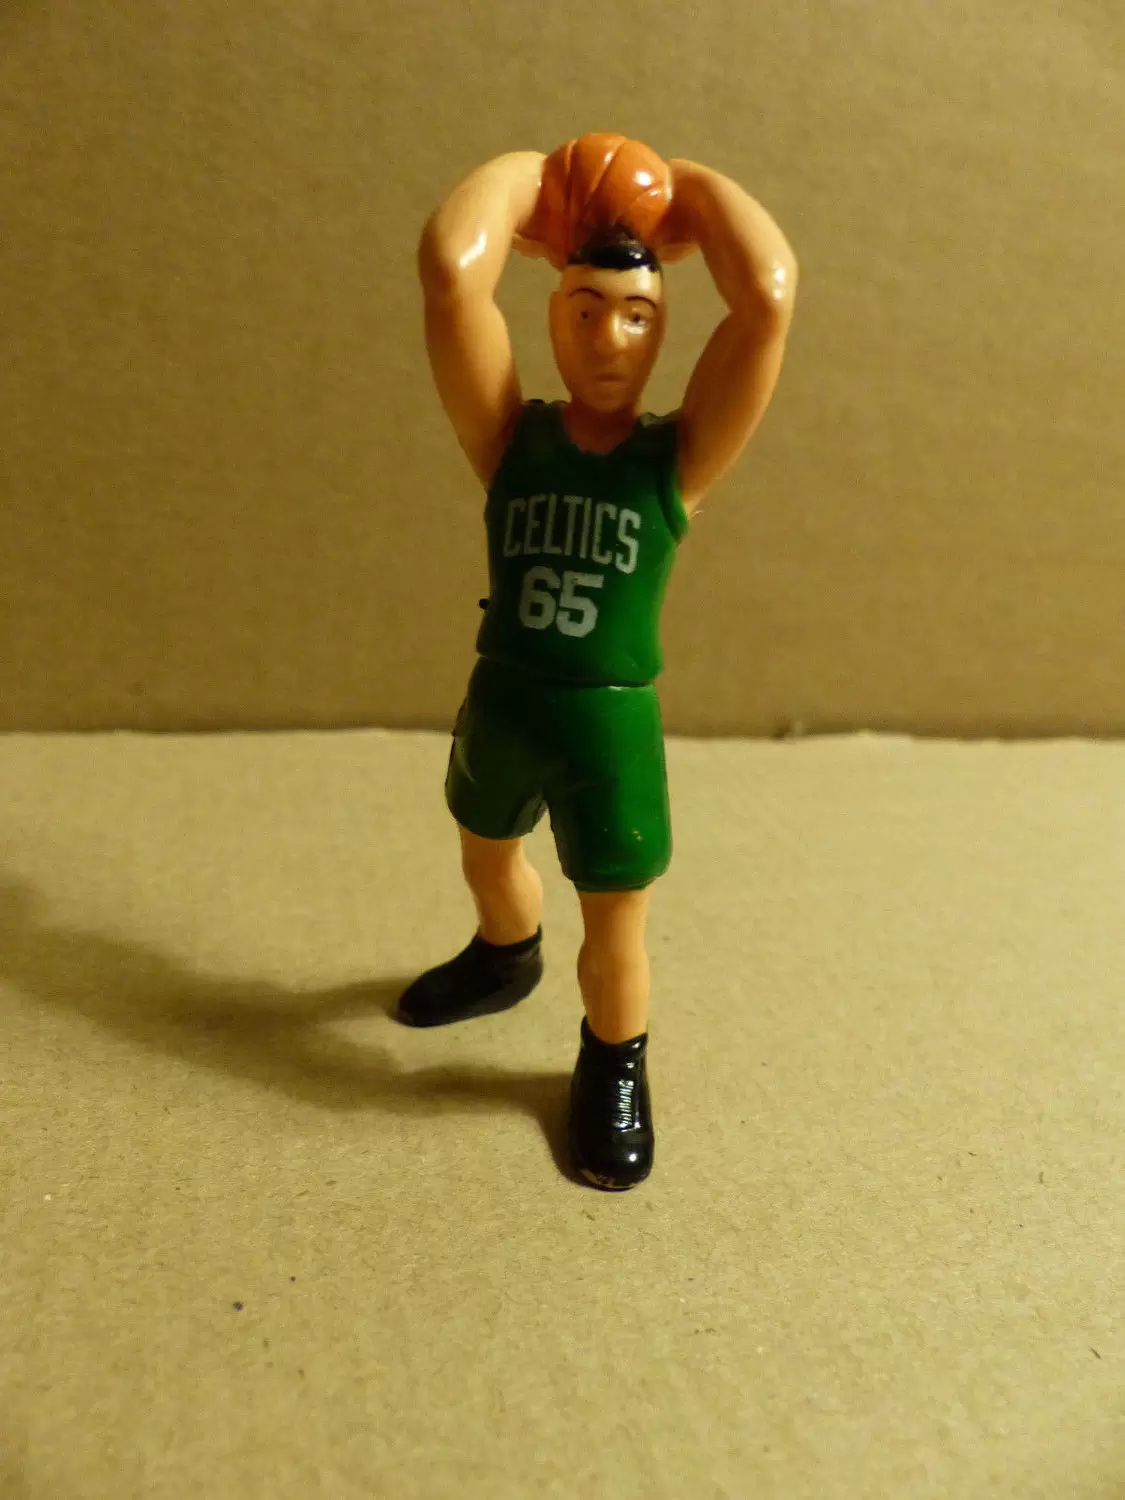 NBA - Celtics 65